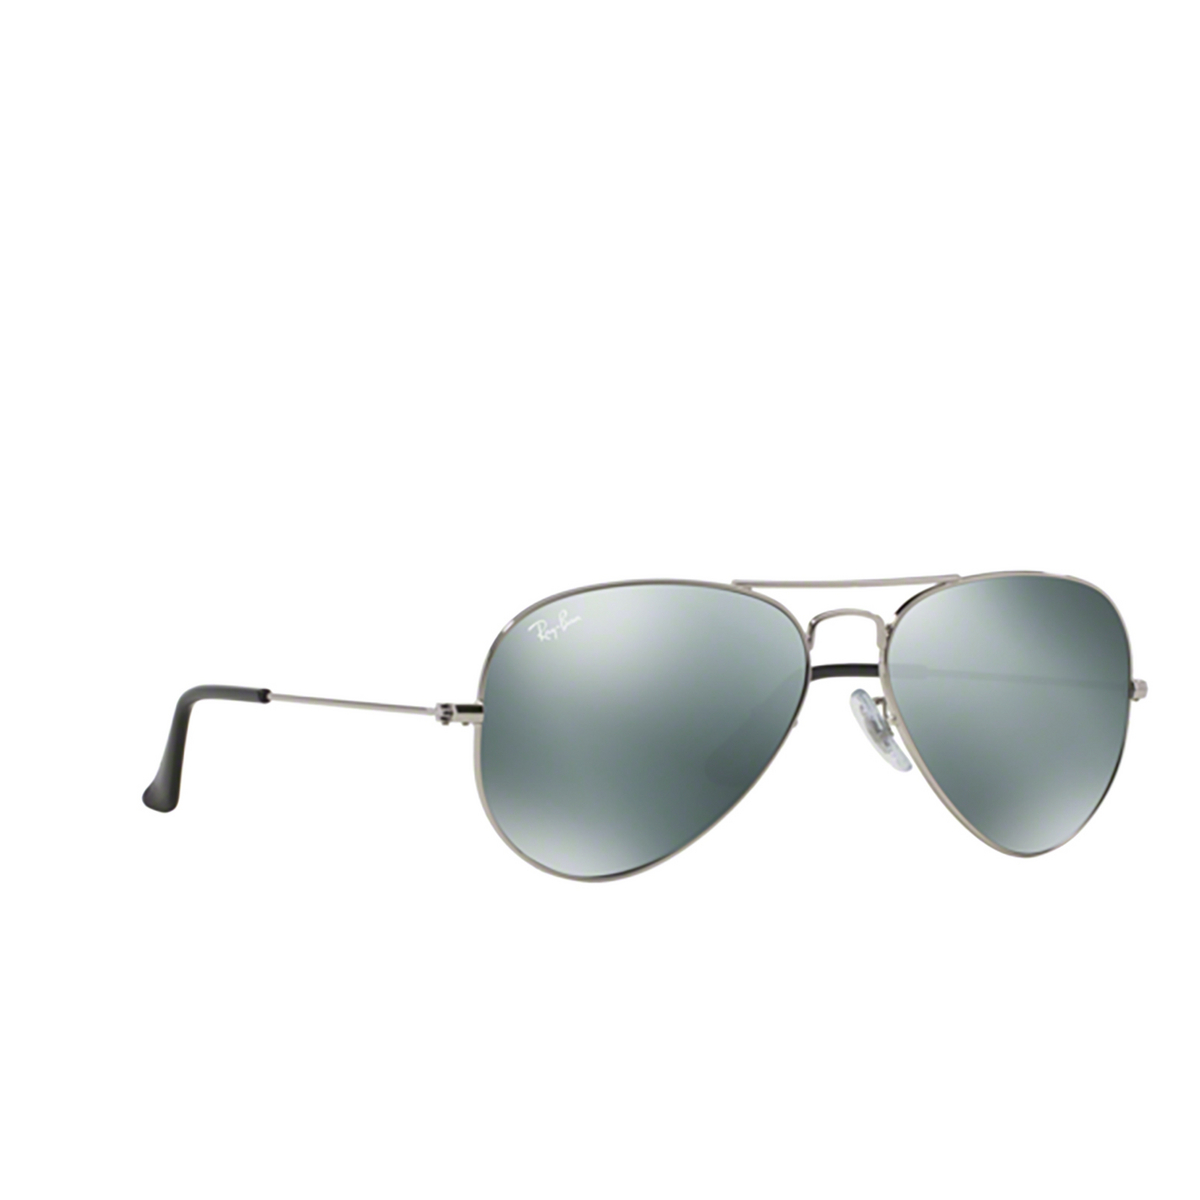 Ray-Ban AVIATOR LARGE METAL Sunglasses W3275 Silver - three-quarters view